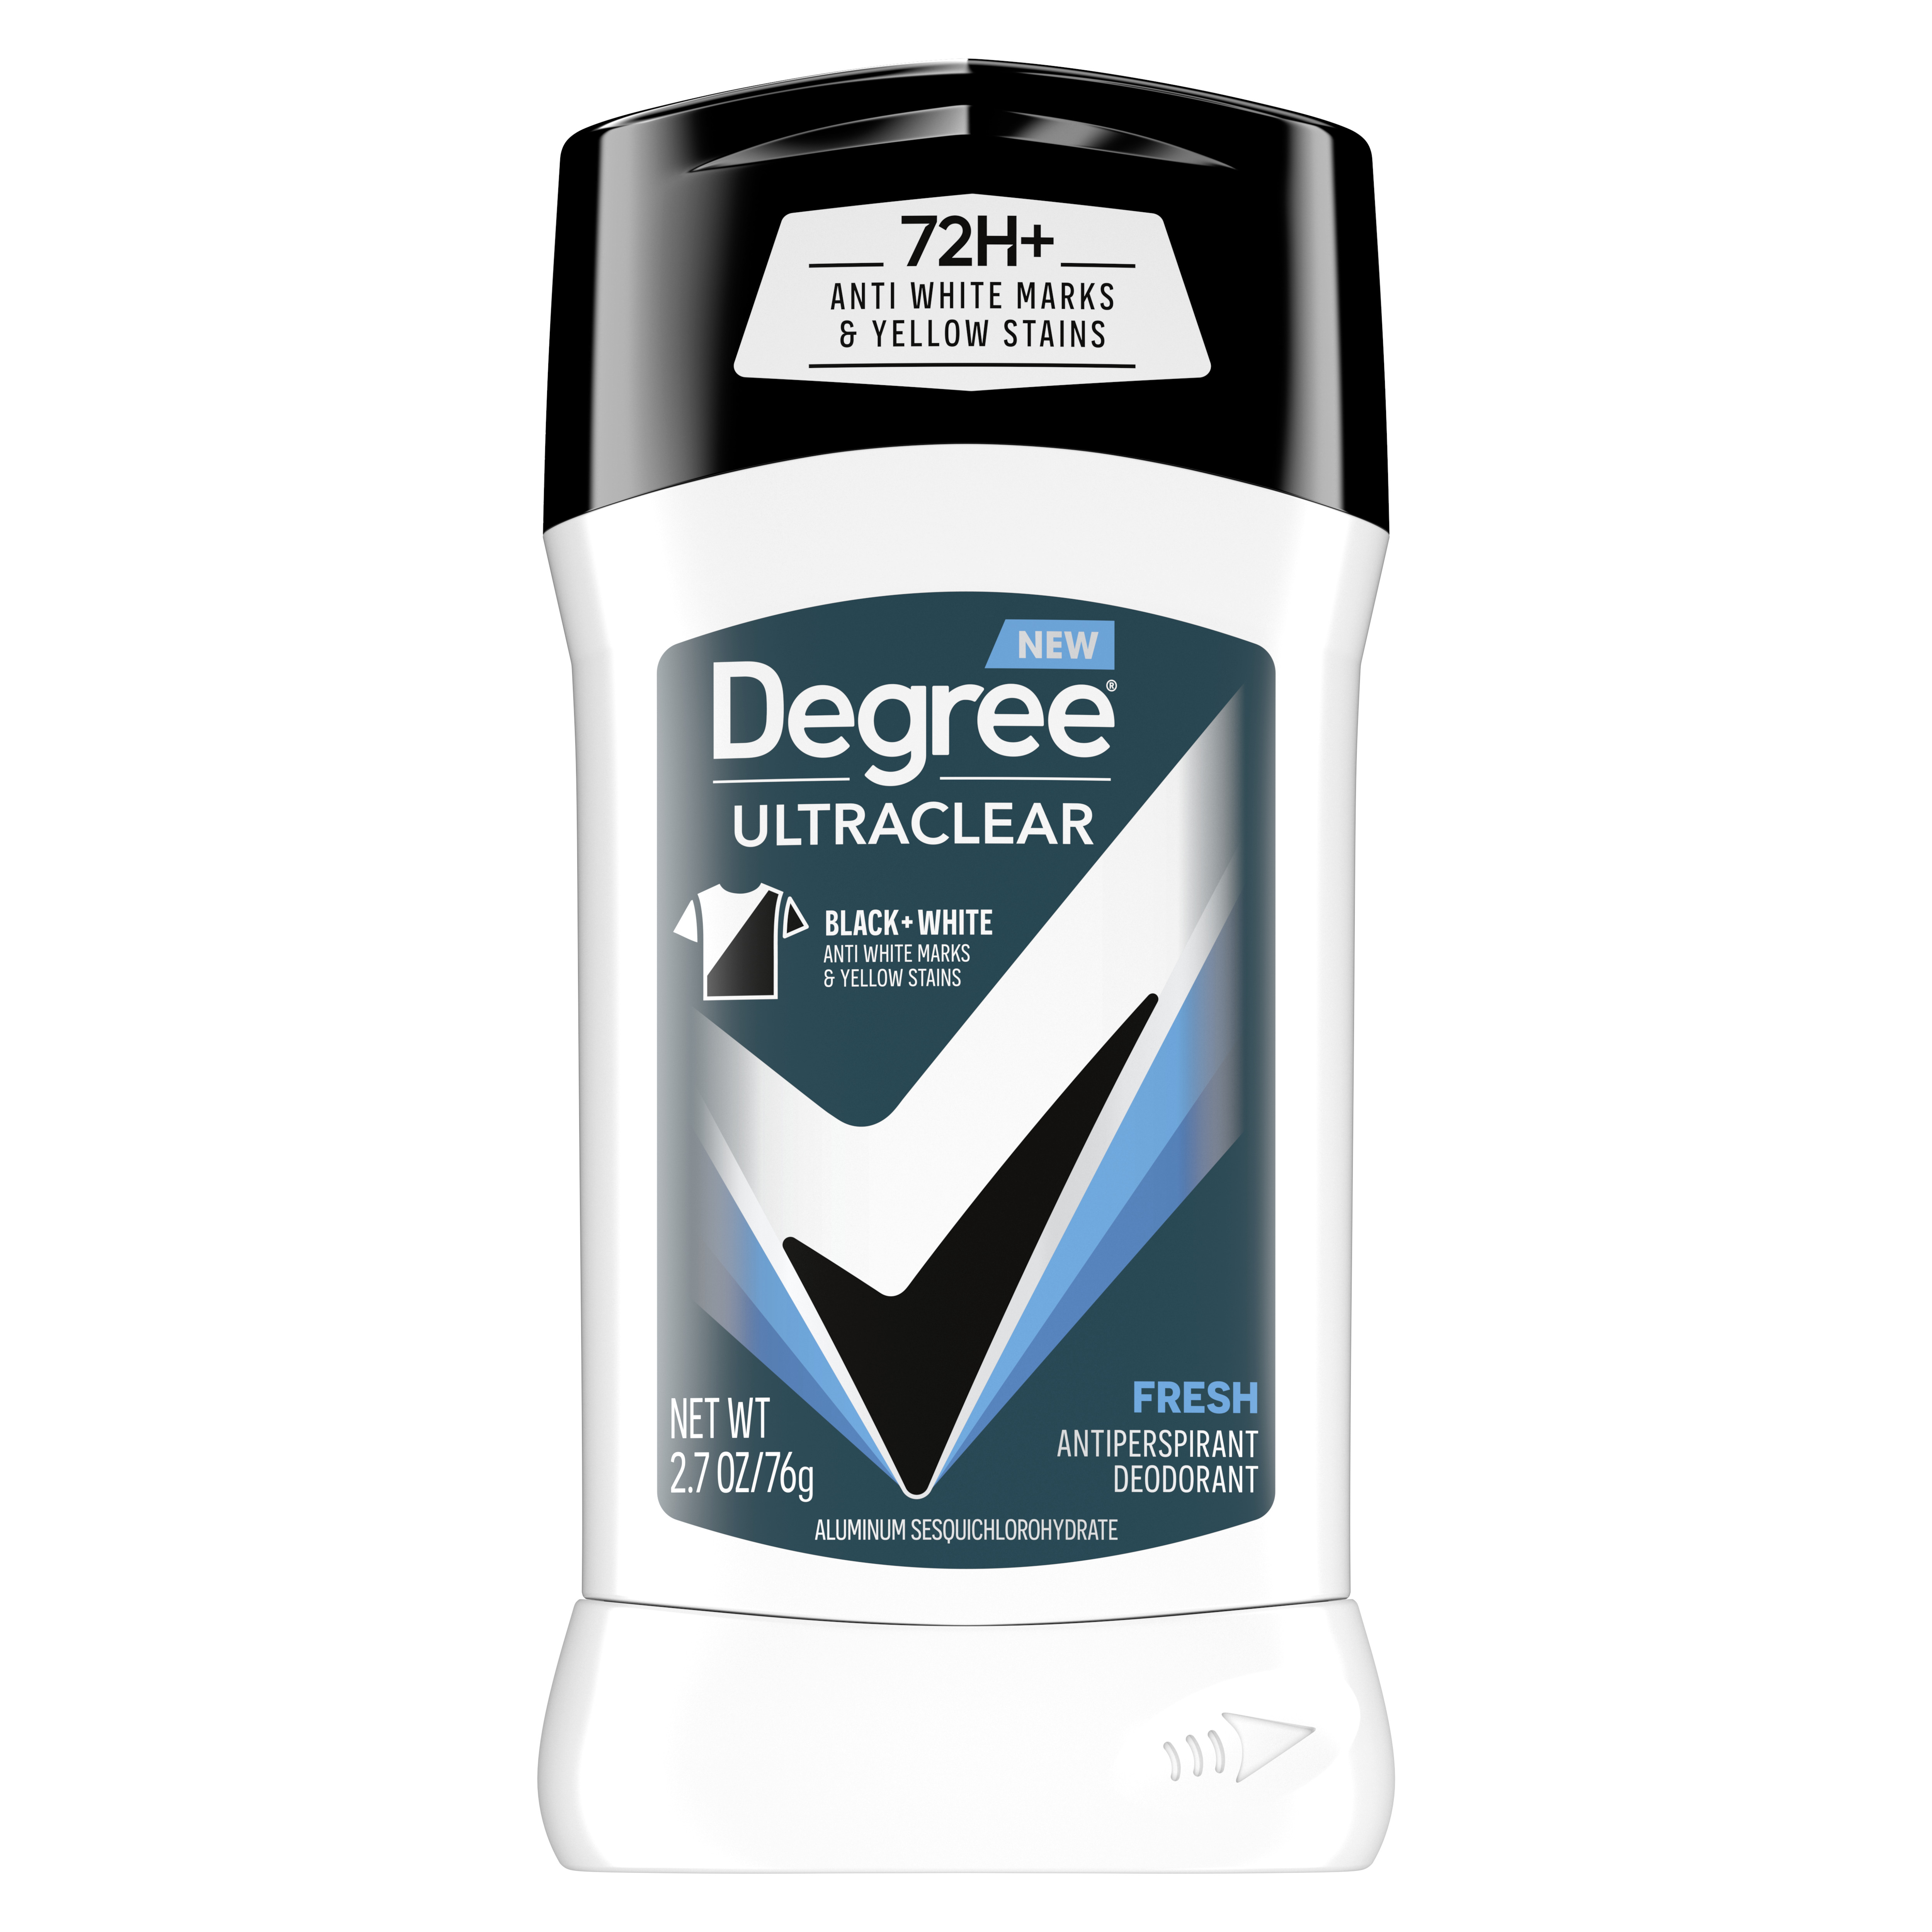 Degree Men, Antiperspirant Deodorant, Ultraclear Fresh 72H+ - SmartLabel™